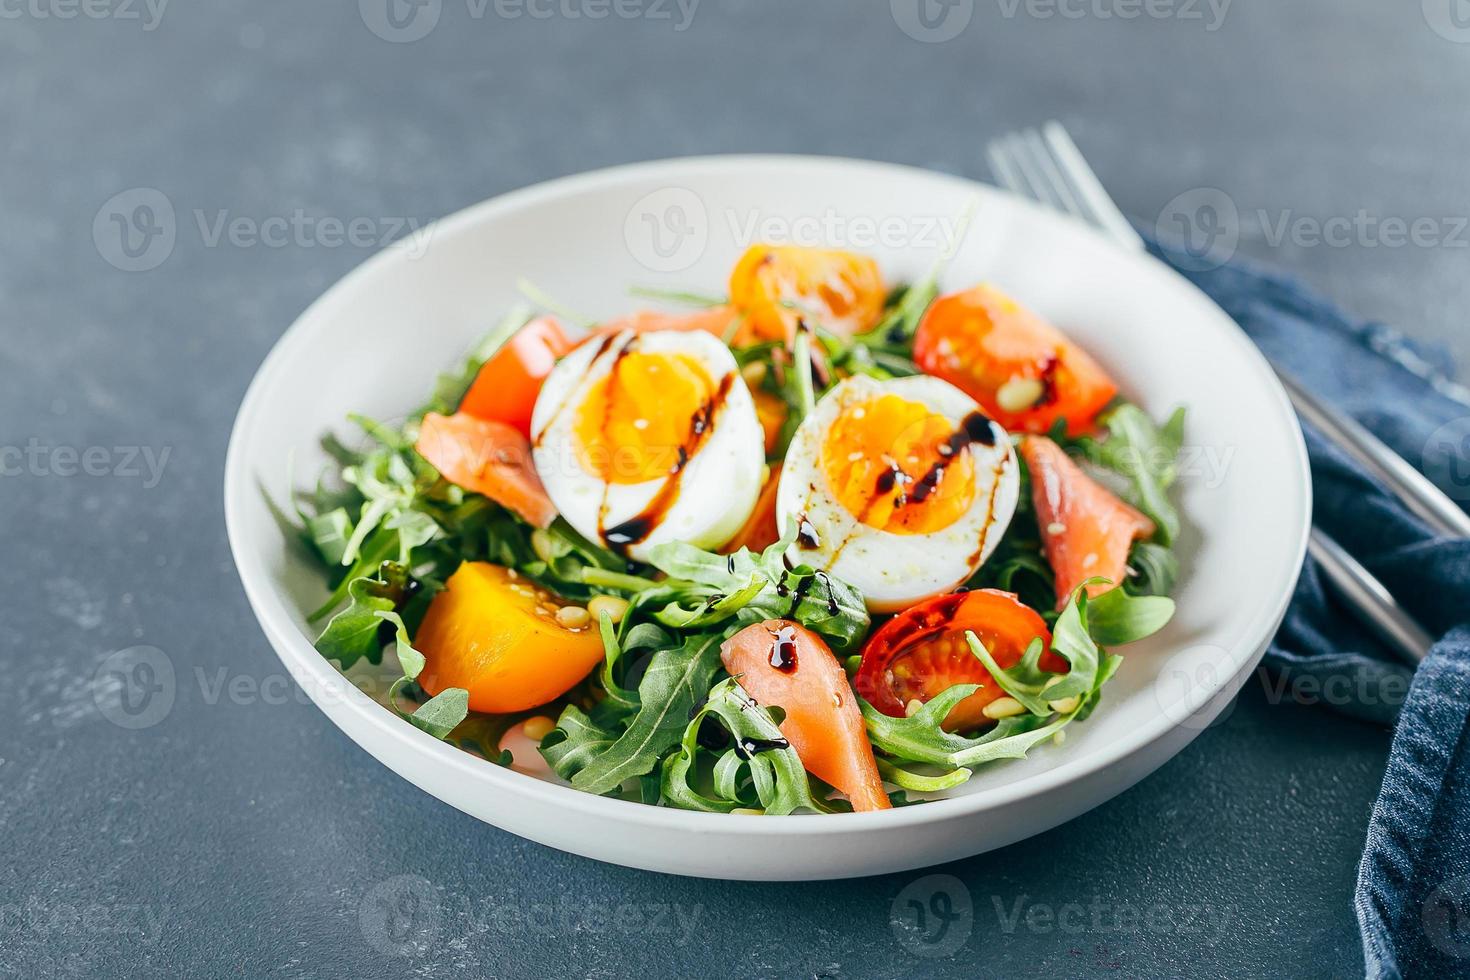 gezond veganistisch salade van vers tomaat, rucola, Zalm, ei en sesam Aan bord. eetpatroon menu. detailopname foto